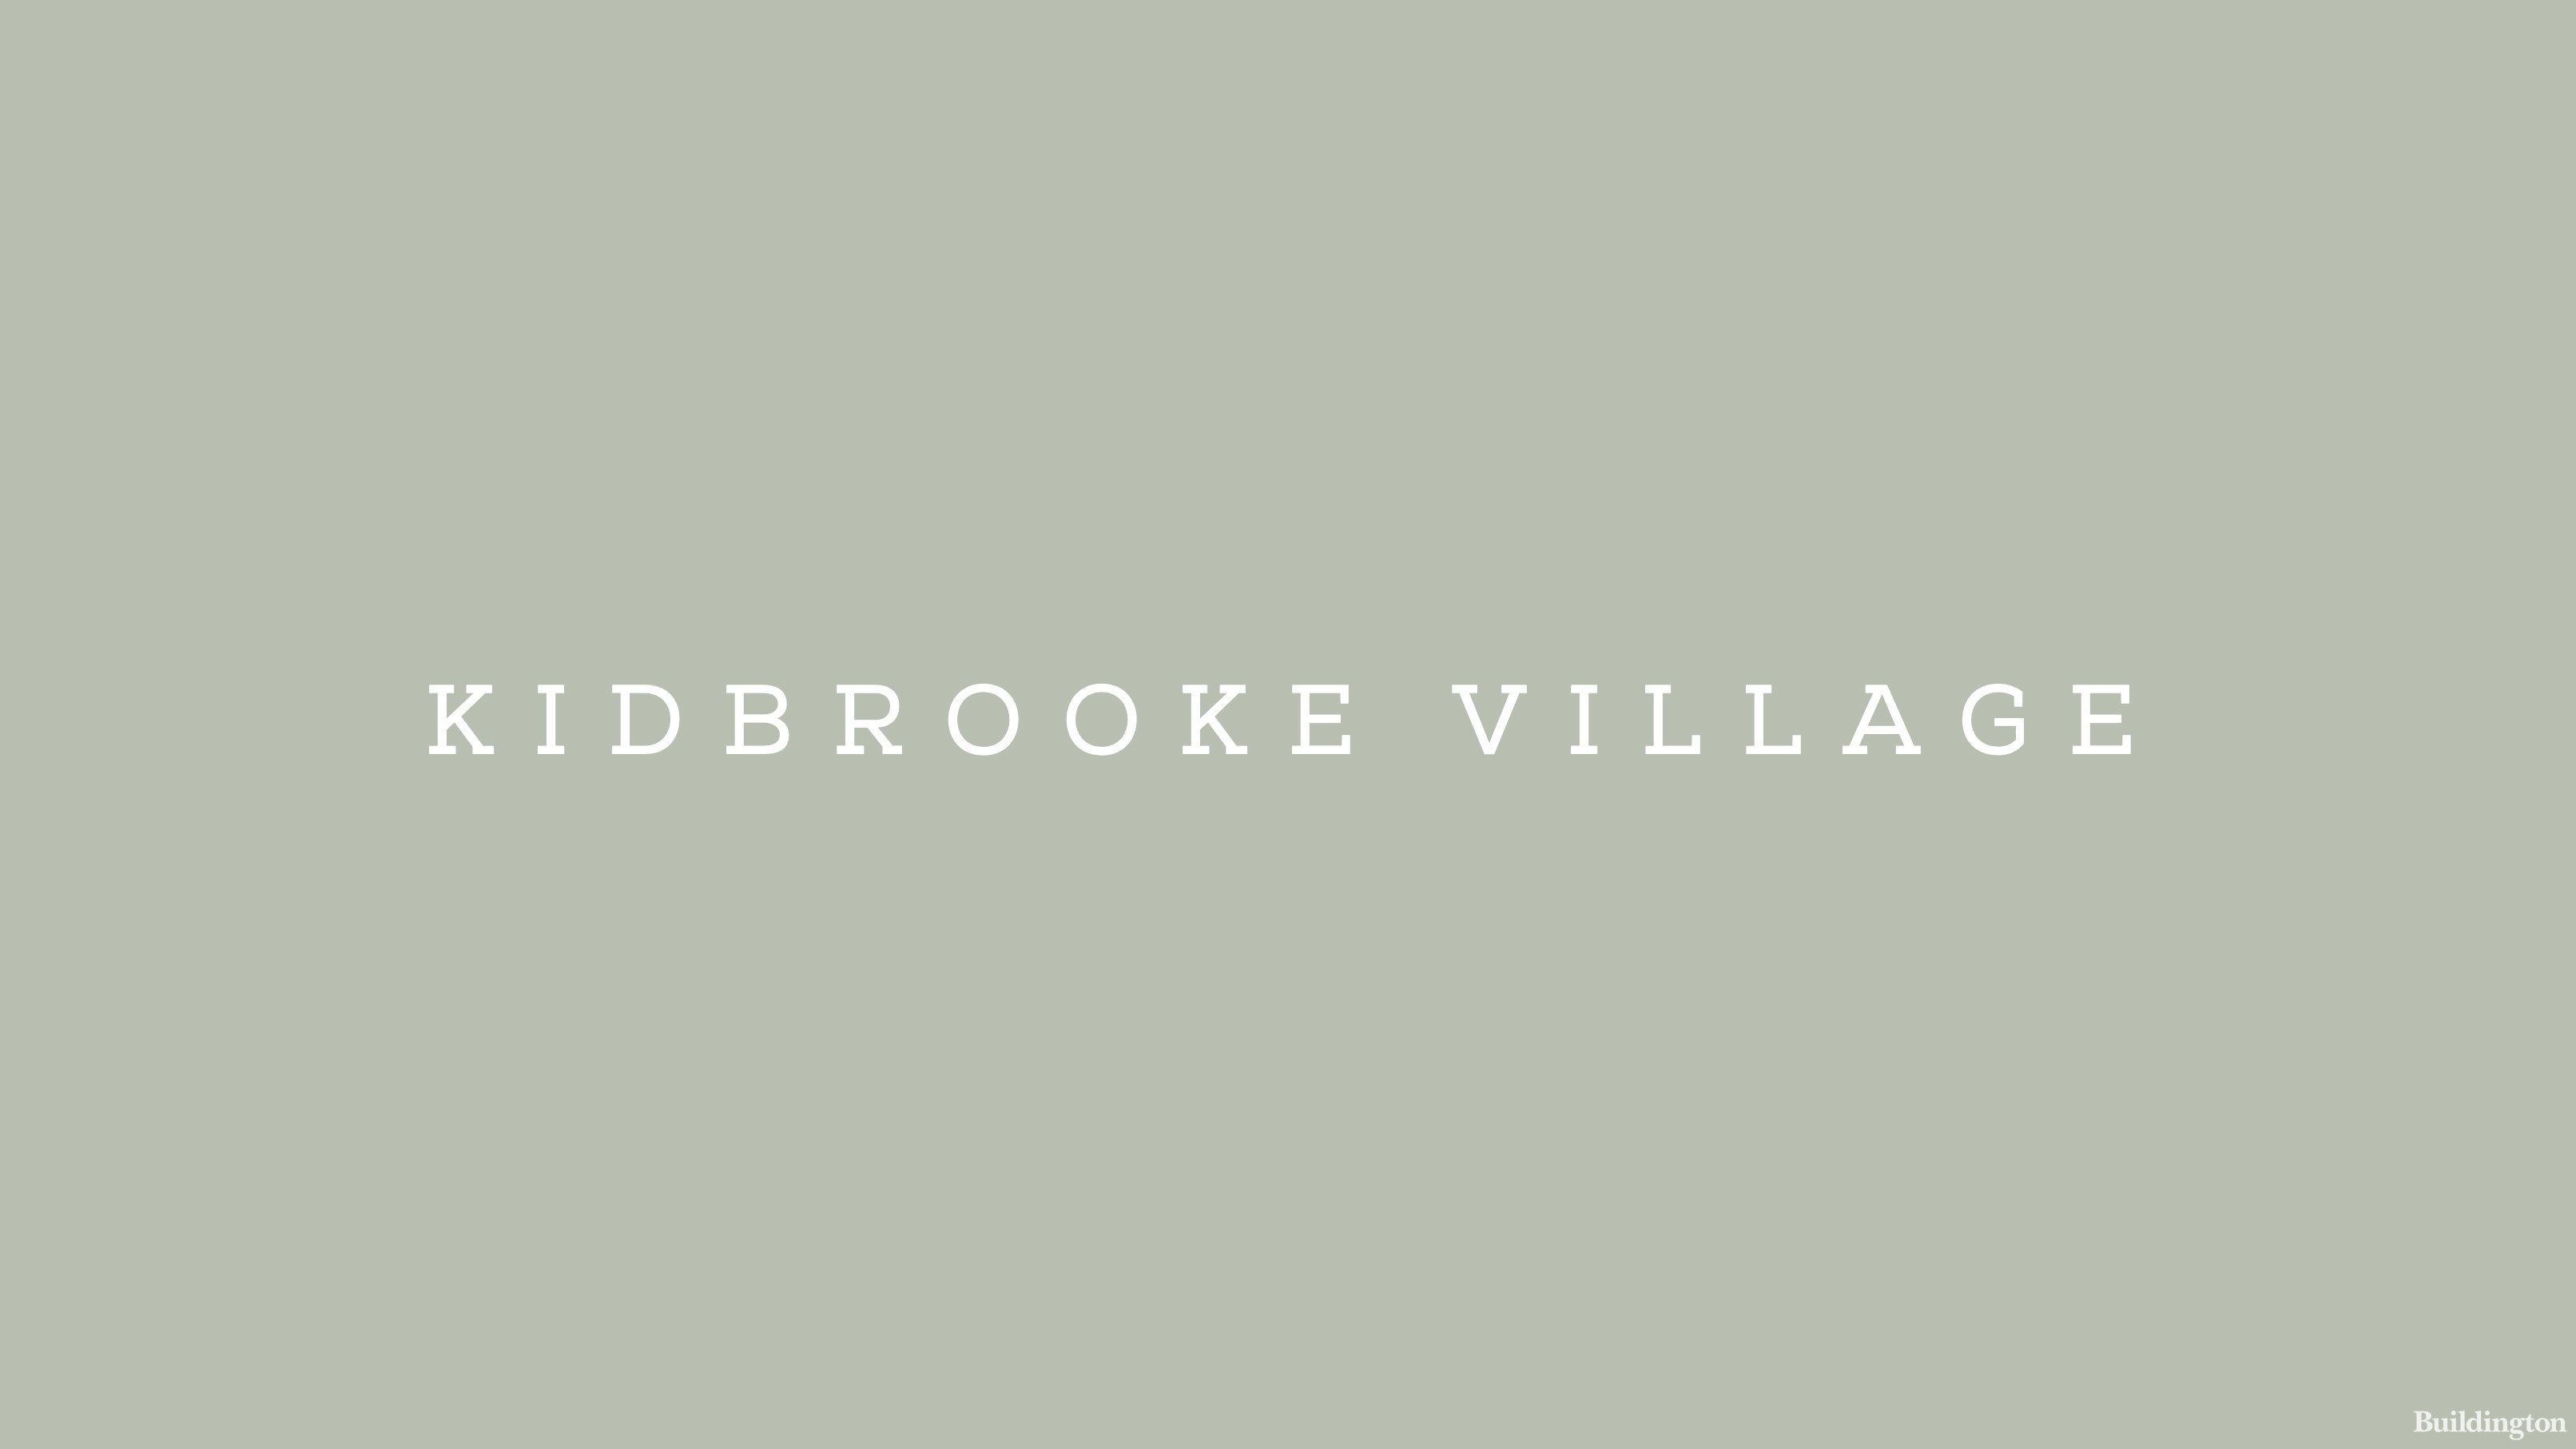 Kidbrooke Village development logo 